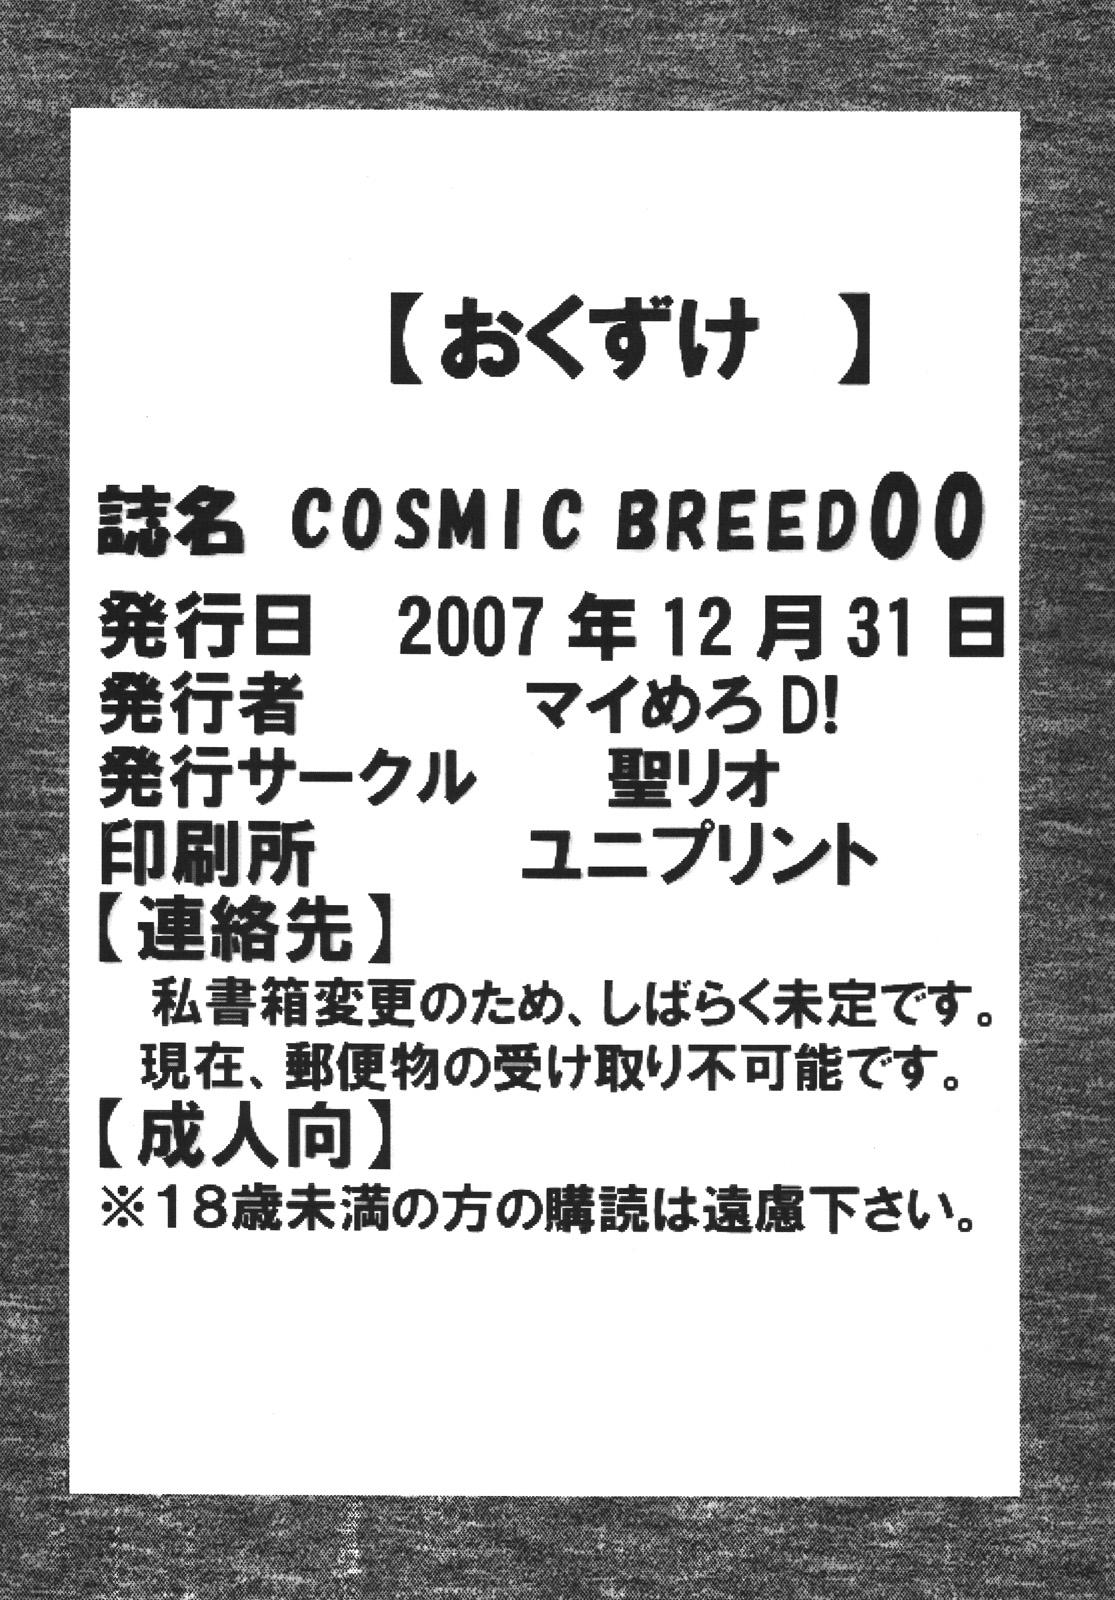 Feet COSMIC BREED 00 - Gundam 00 Play - Page 49